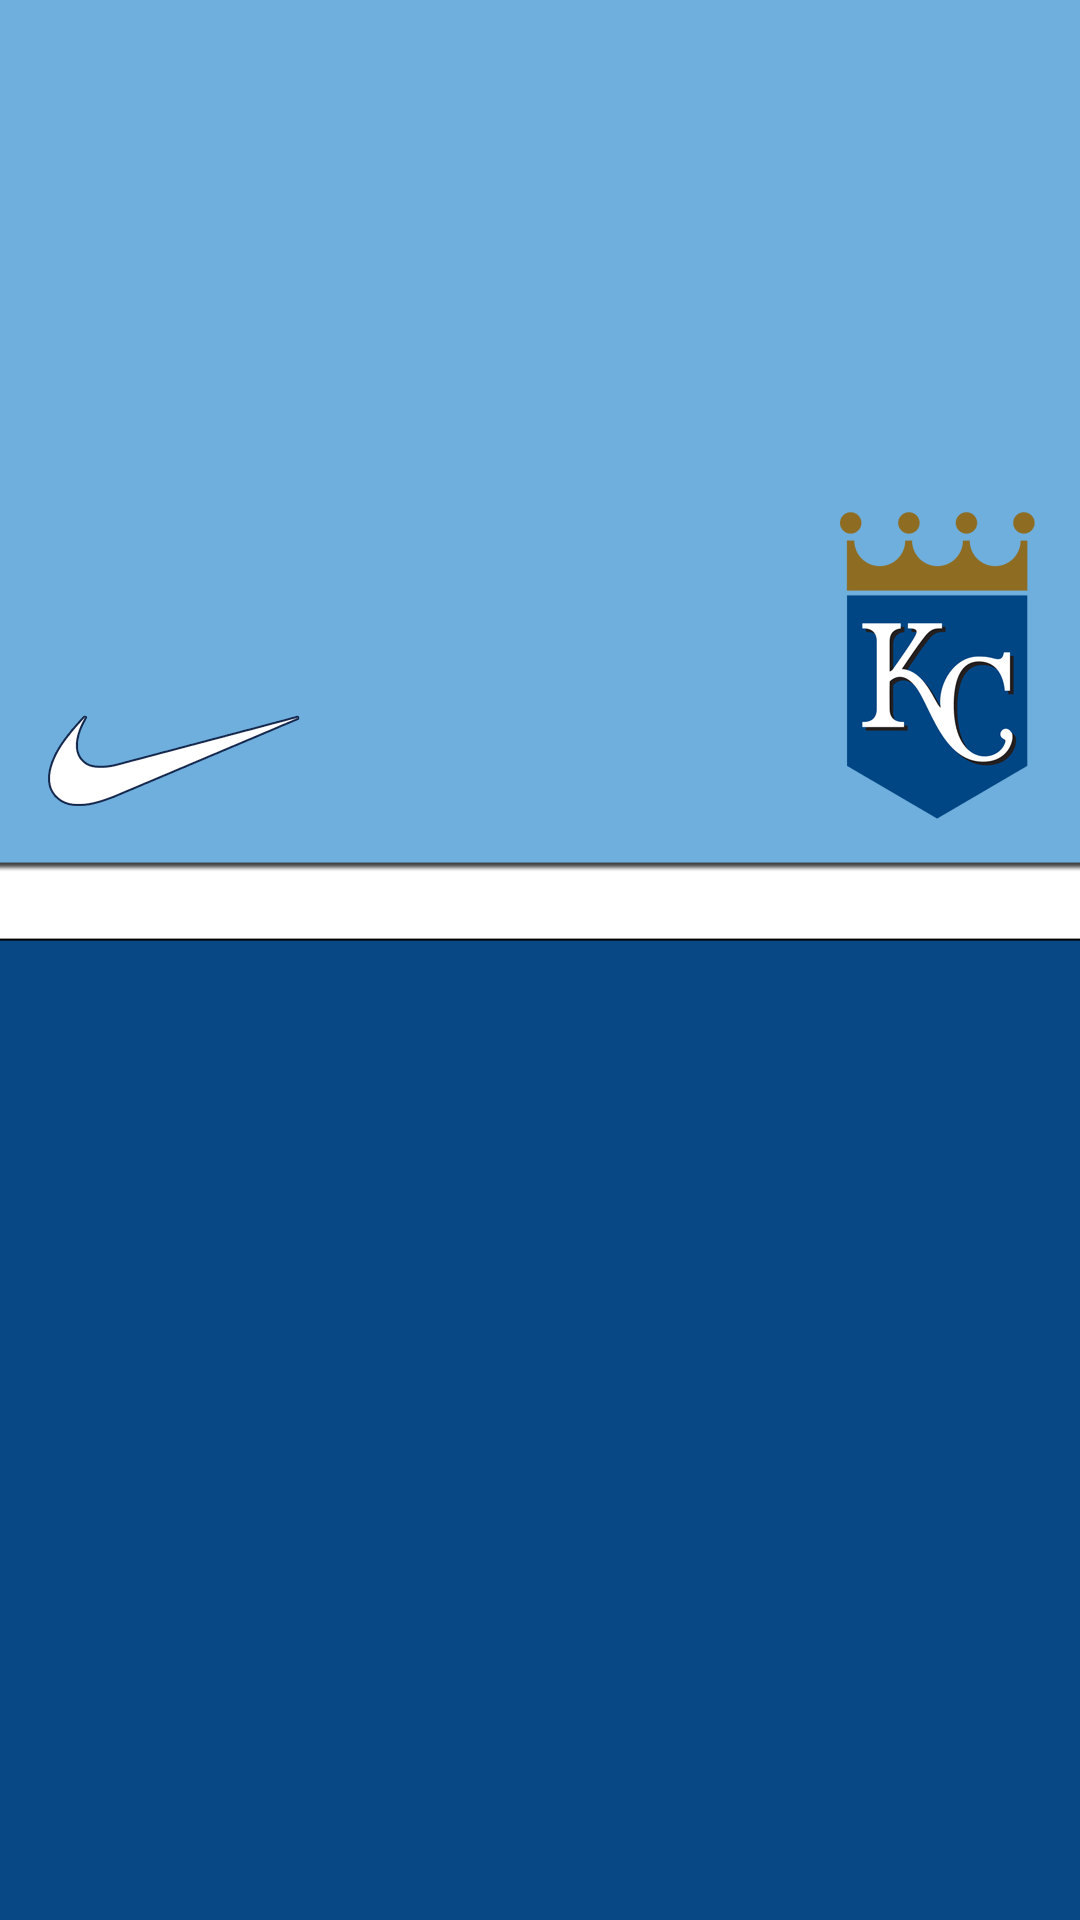 Kansas City Royals Nike IPhone wallpaper 2018 in Baseball